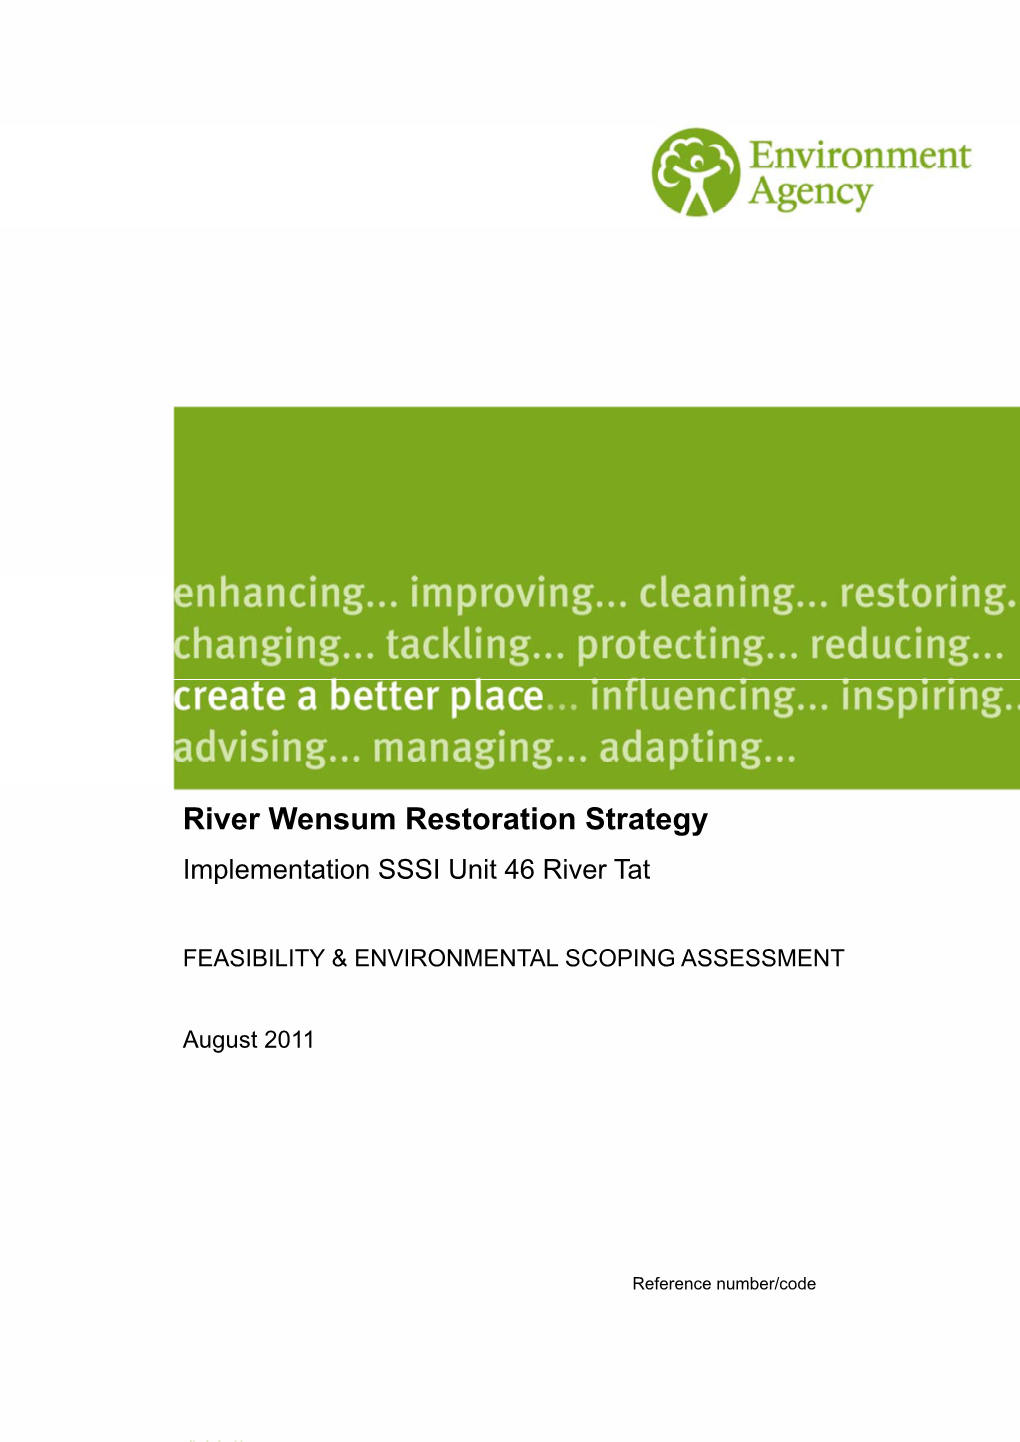 River Wensum Restoration Strategy Implementation SSSI Unit 46 River Tat